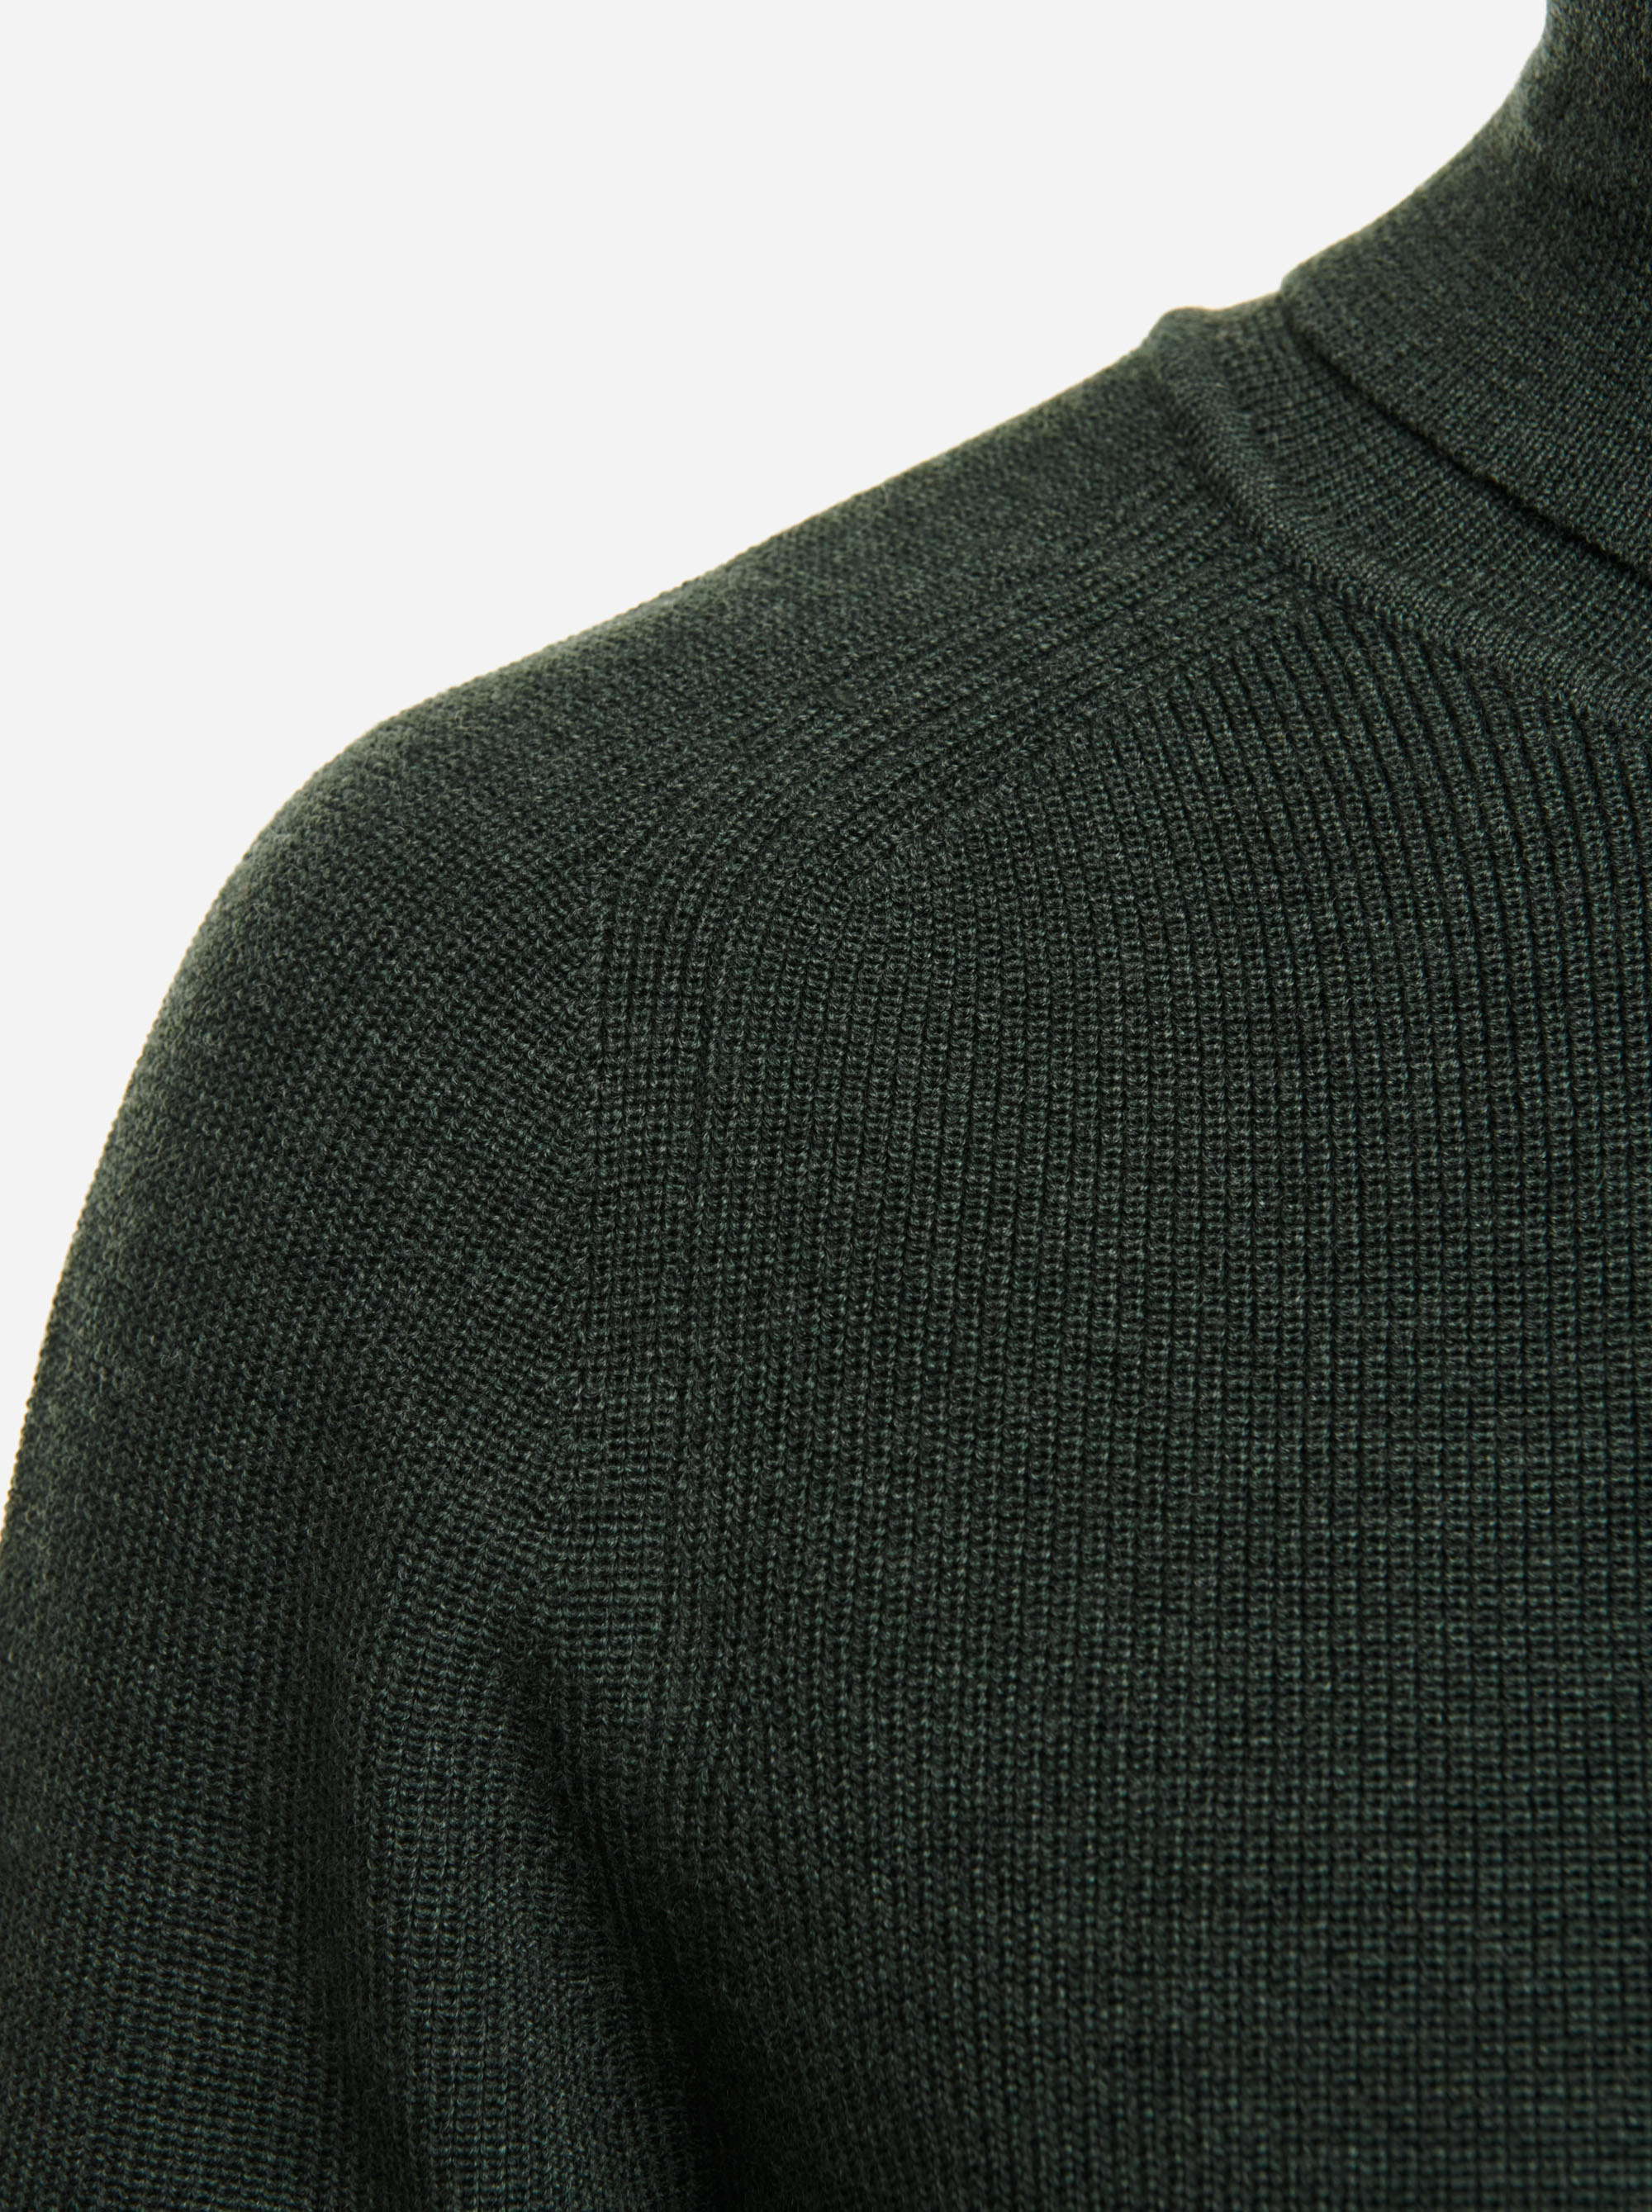 Teym - Turtleneck - The Merino Sweater - Men - Green - 4